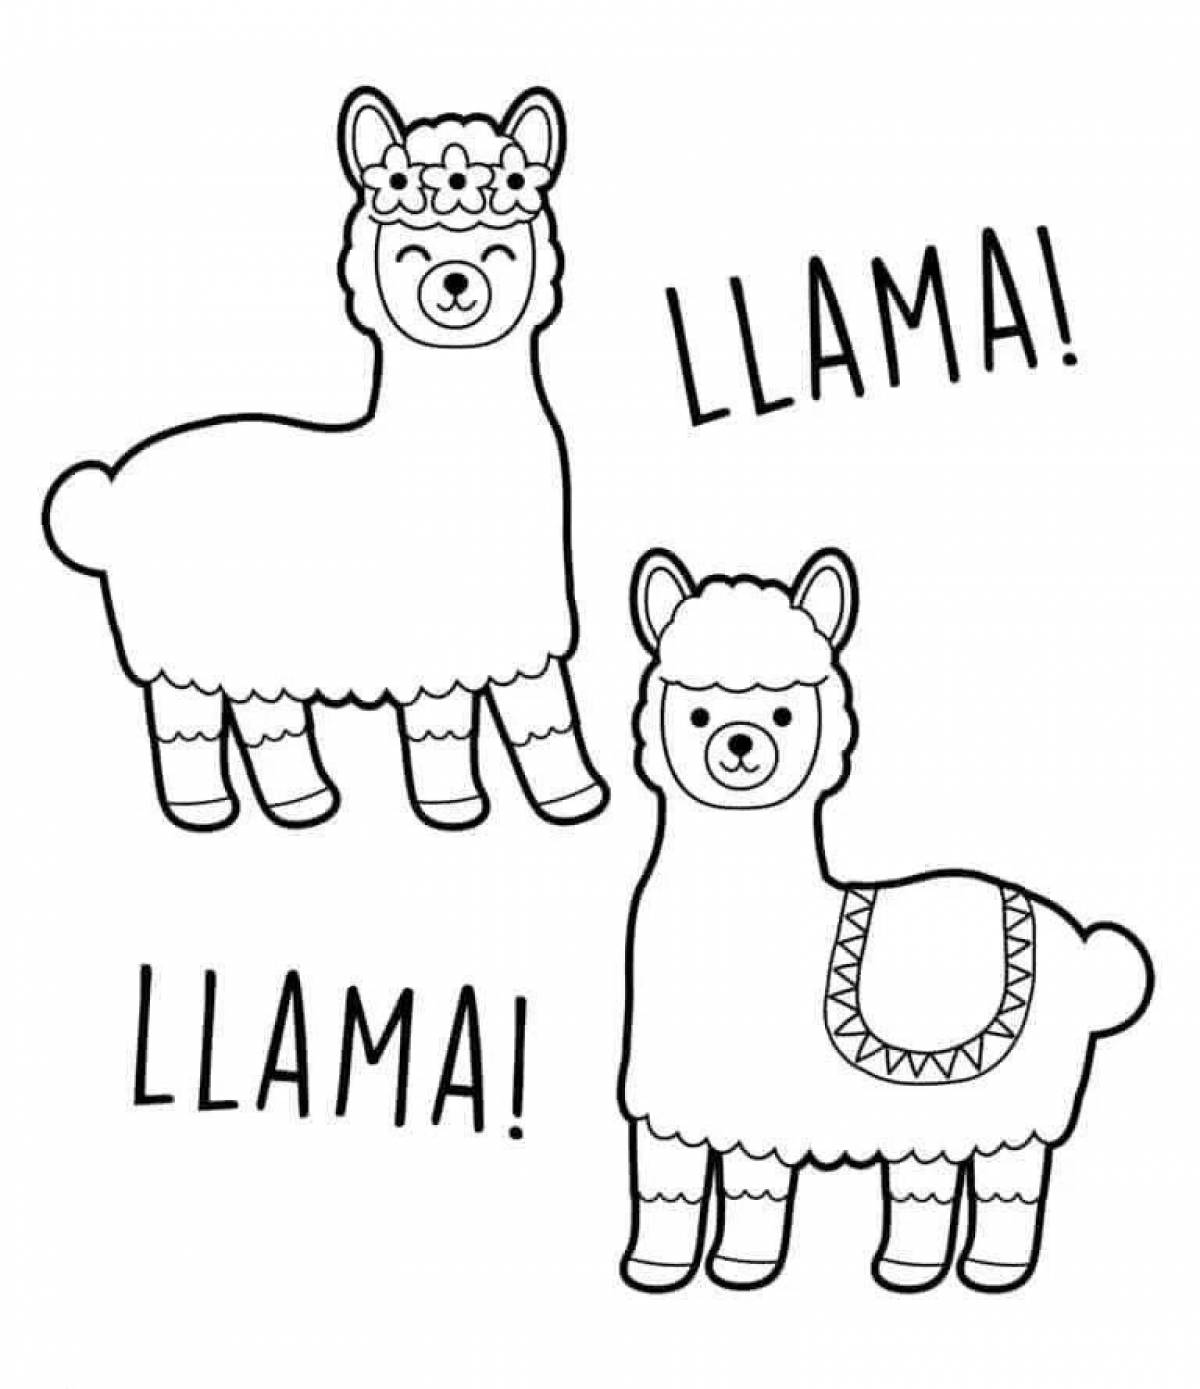 Awesome cute llama coloring book